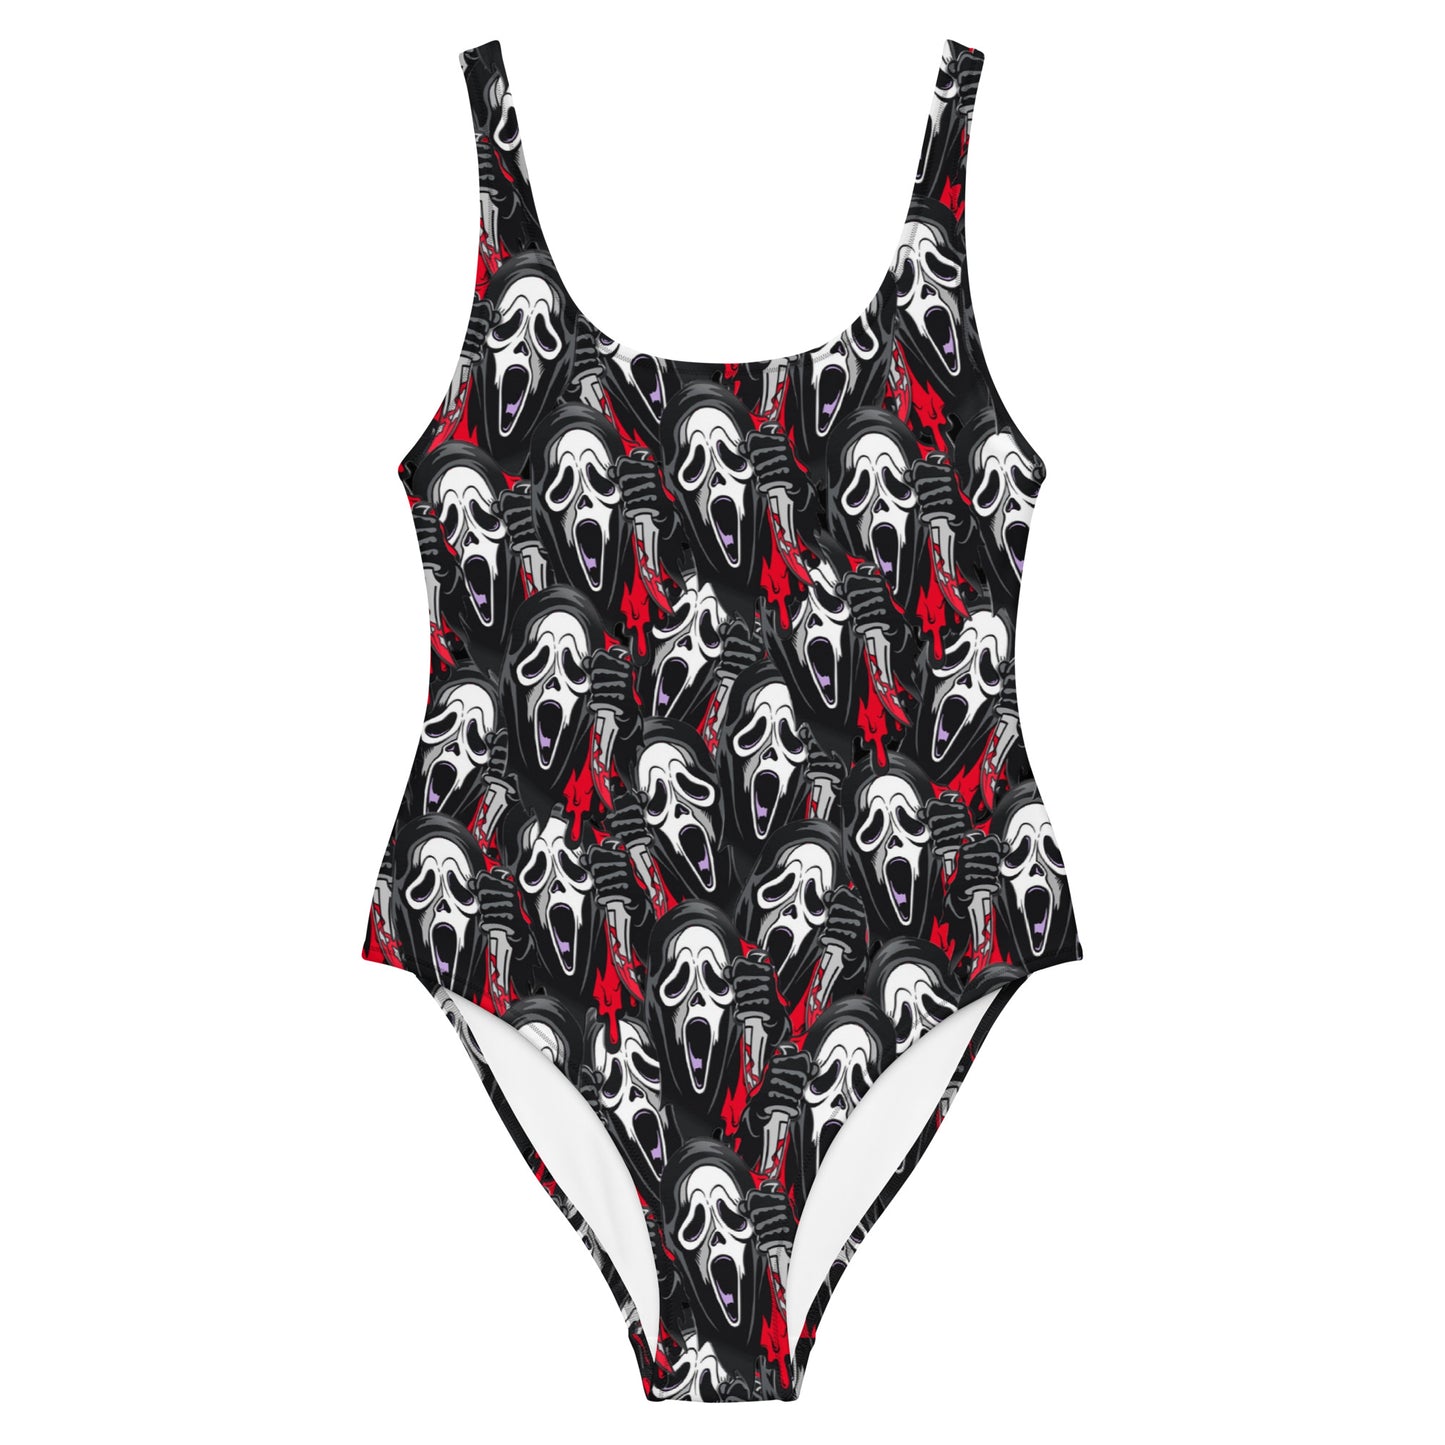 Scream Inspired One-Piece Swimsuit